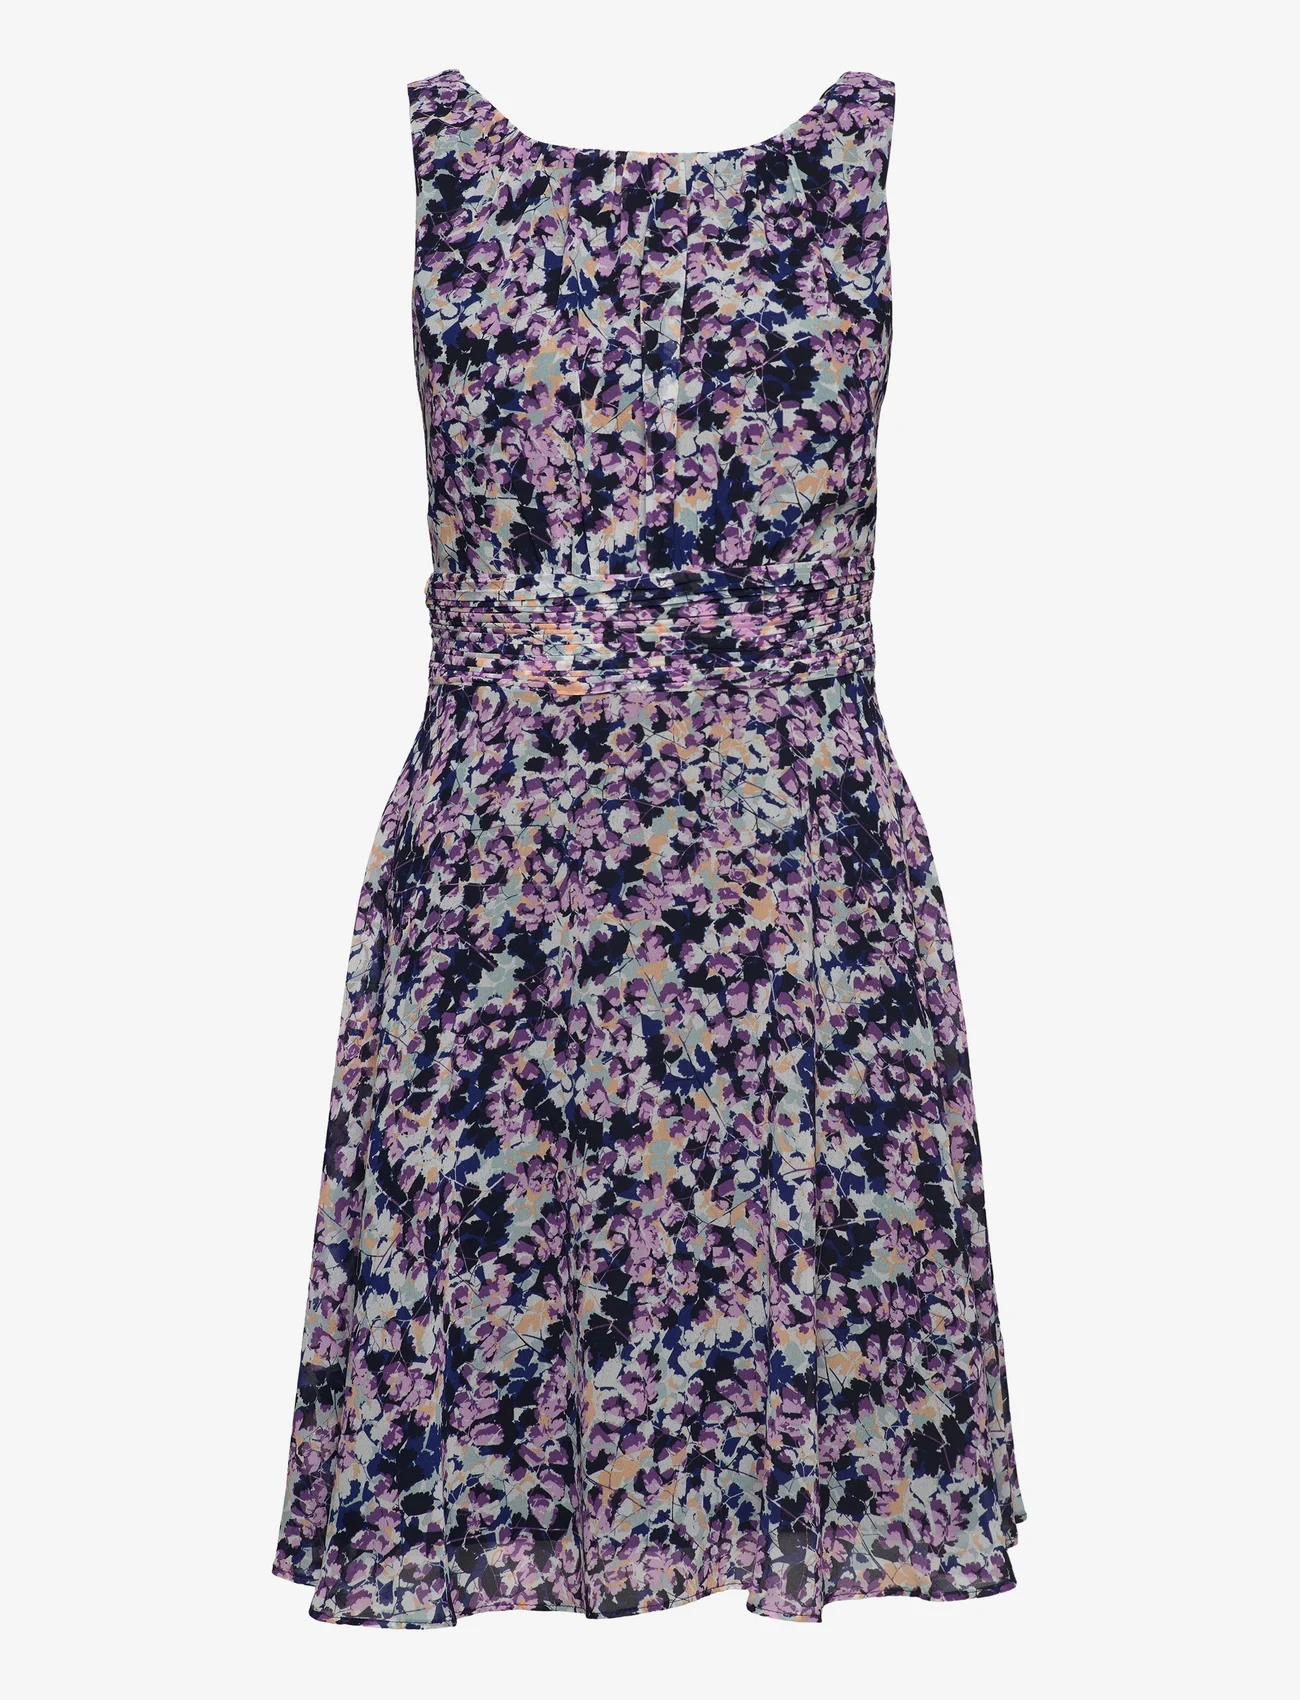 Esprit Collection - Recycled: Chiffon dress with a gathered waist - korte jurken - navy 4 - 0